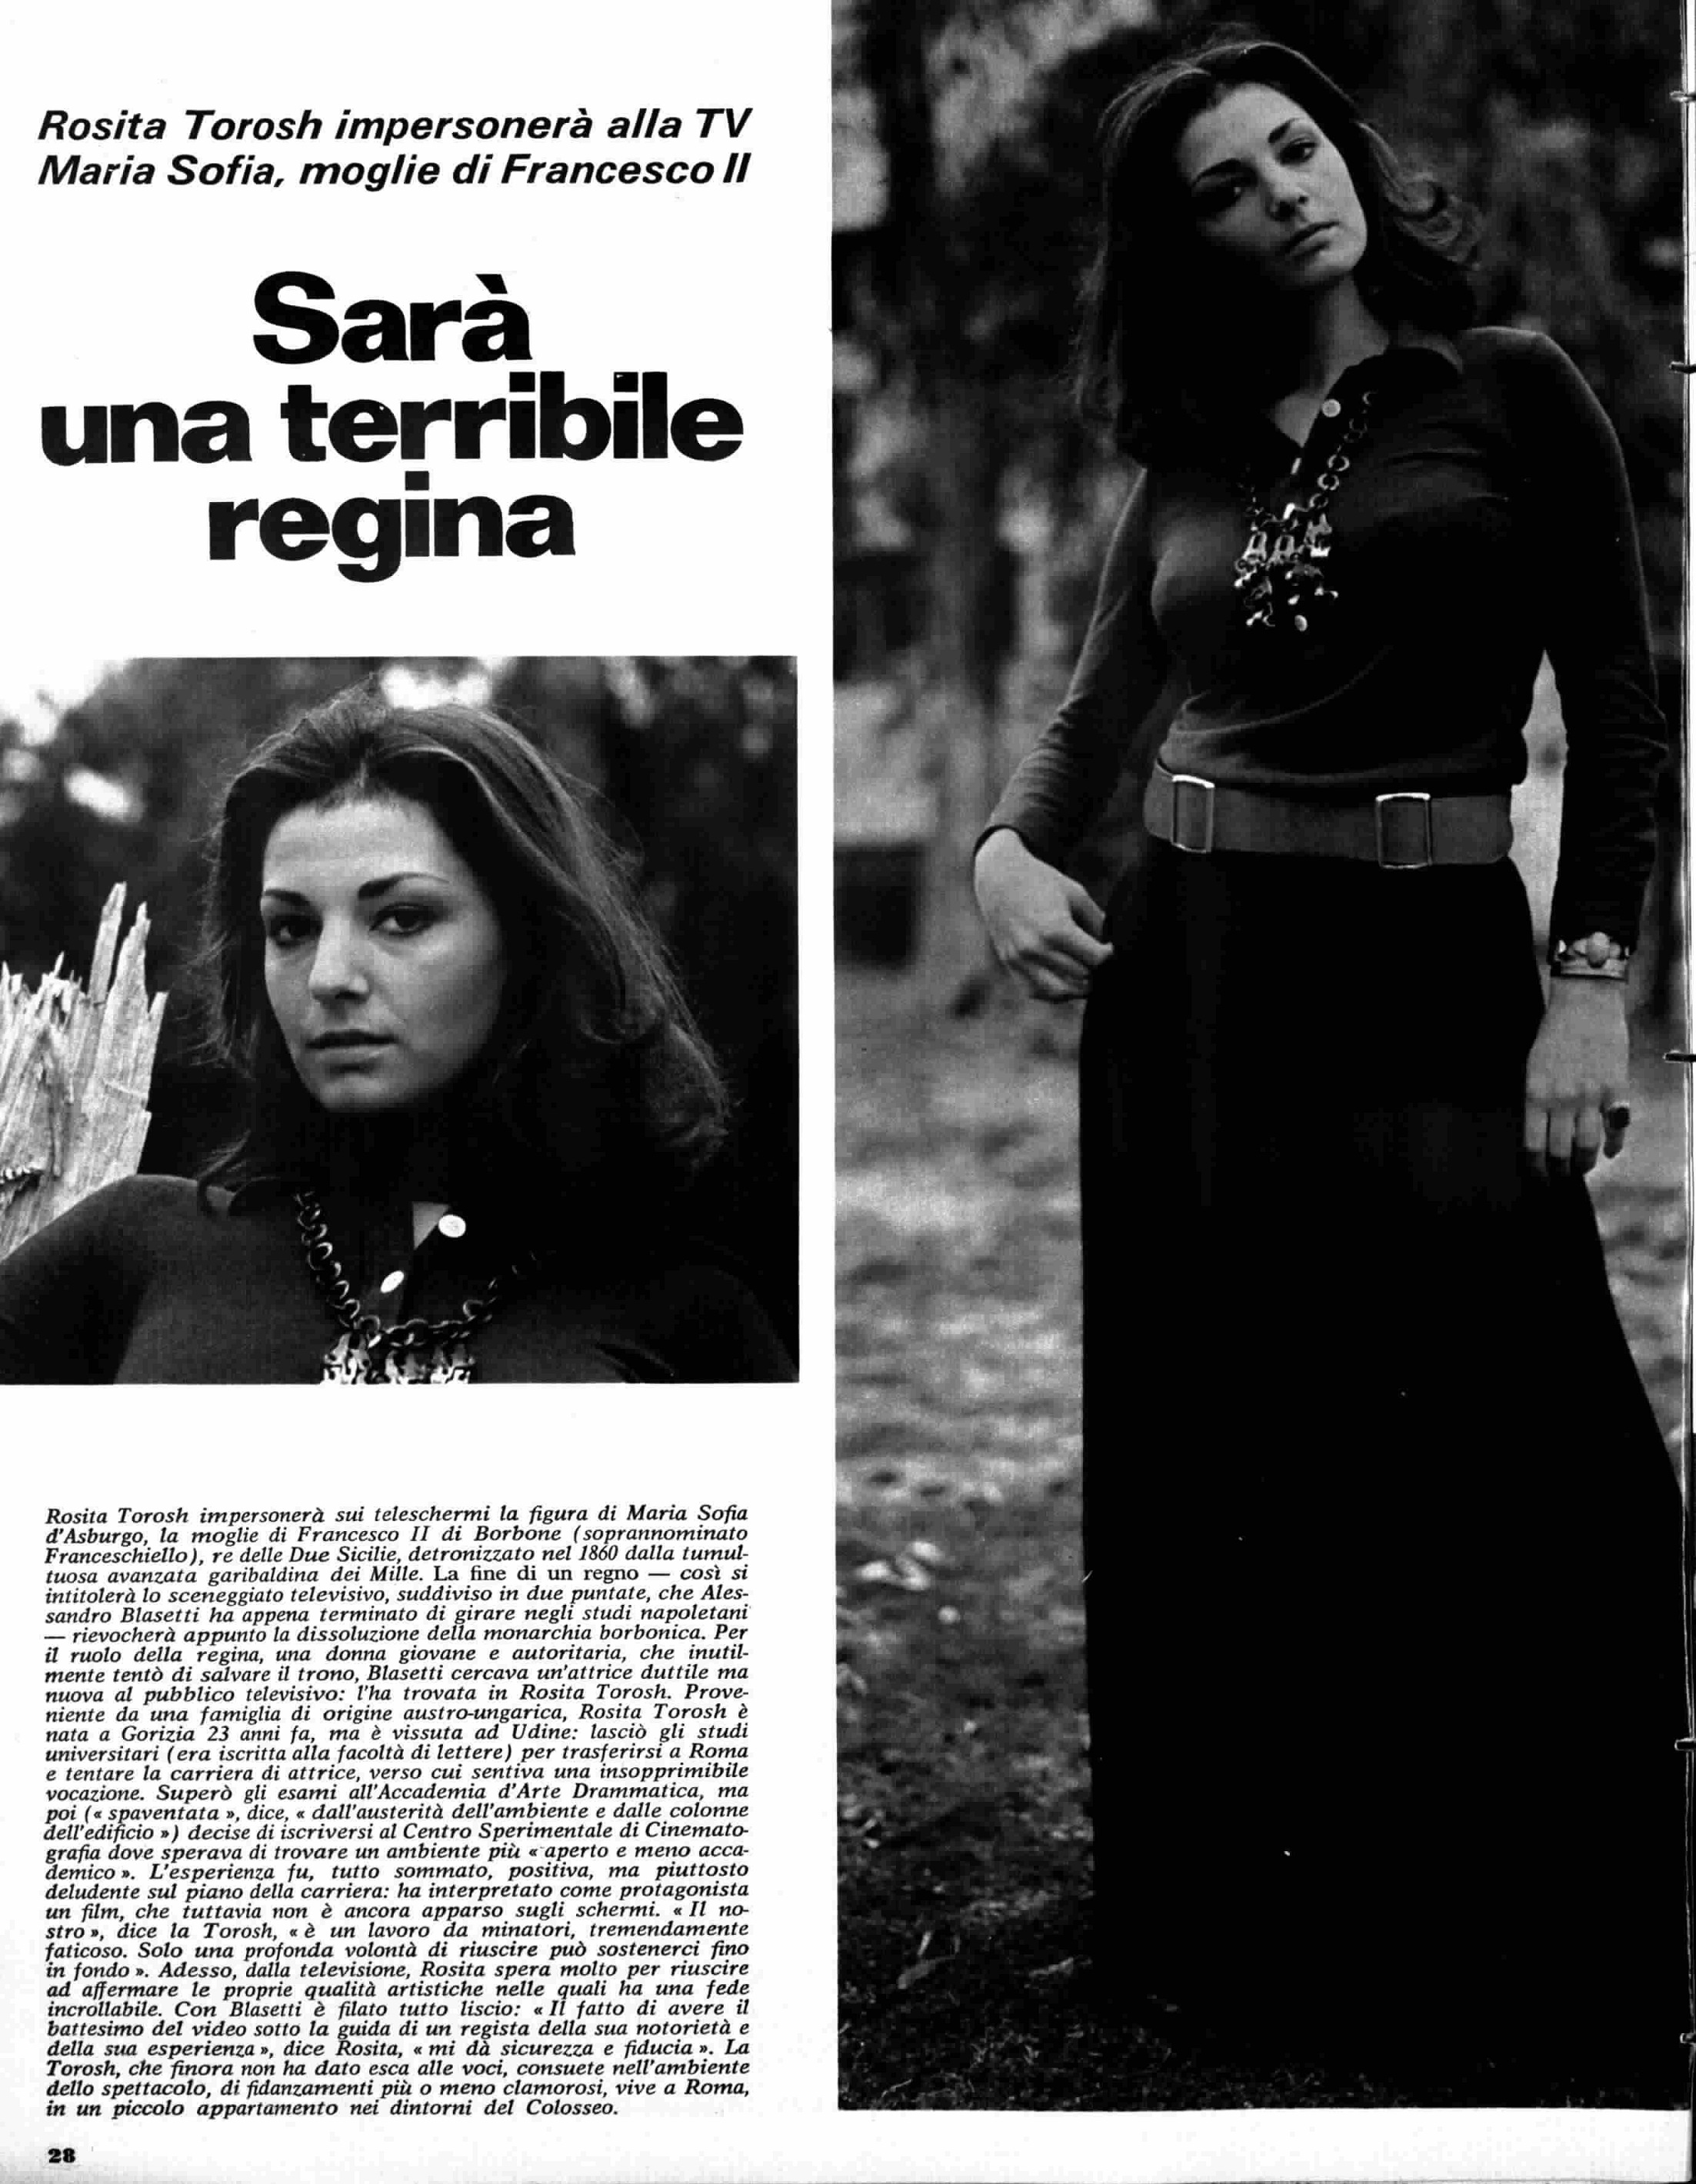 Radiocorriere 7 1970 - Rosita Article.jpg